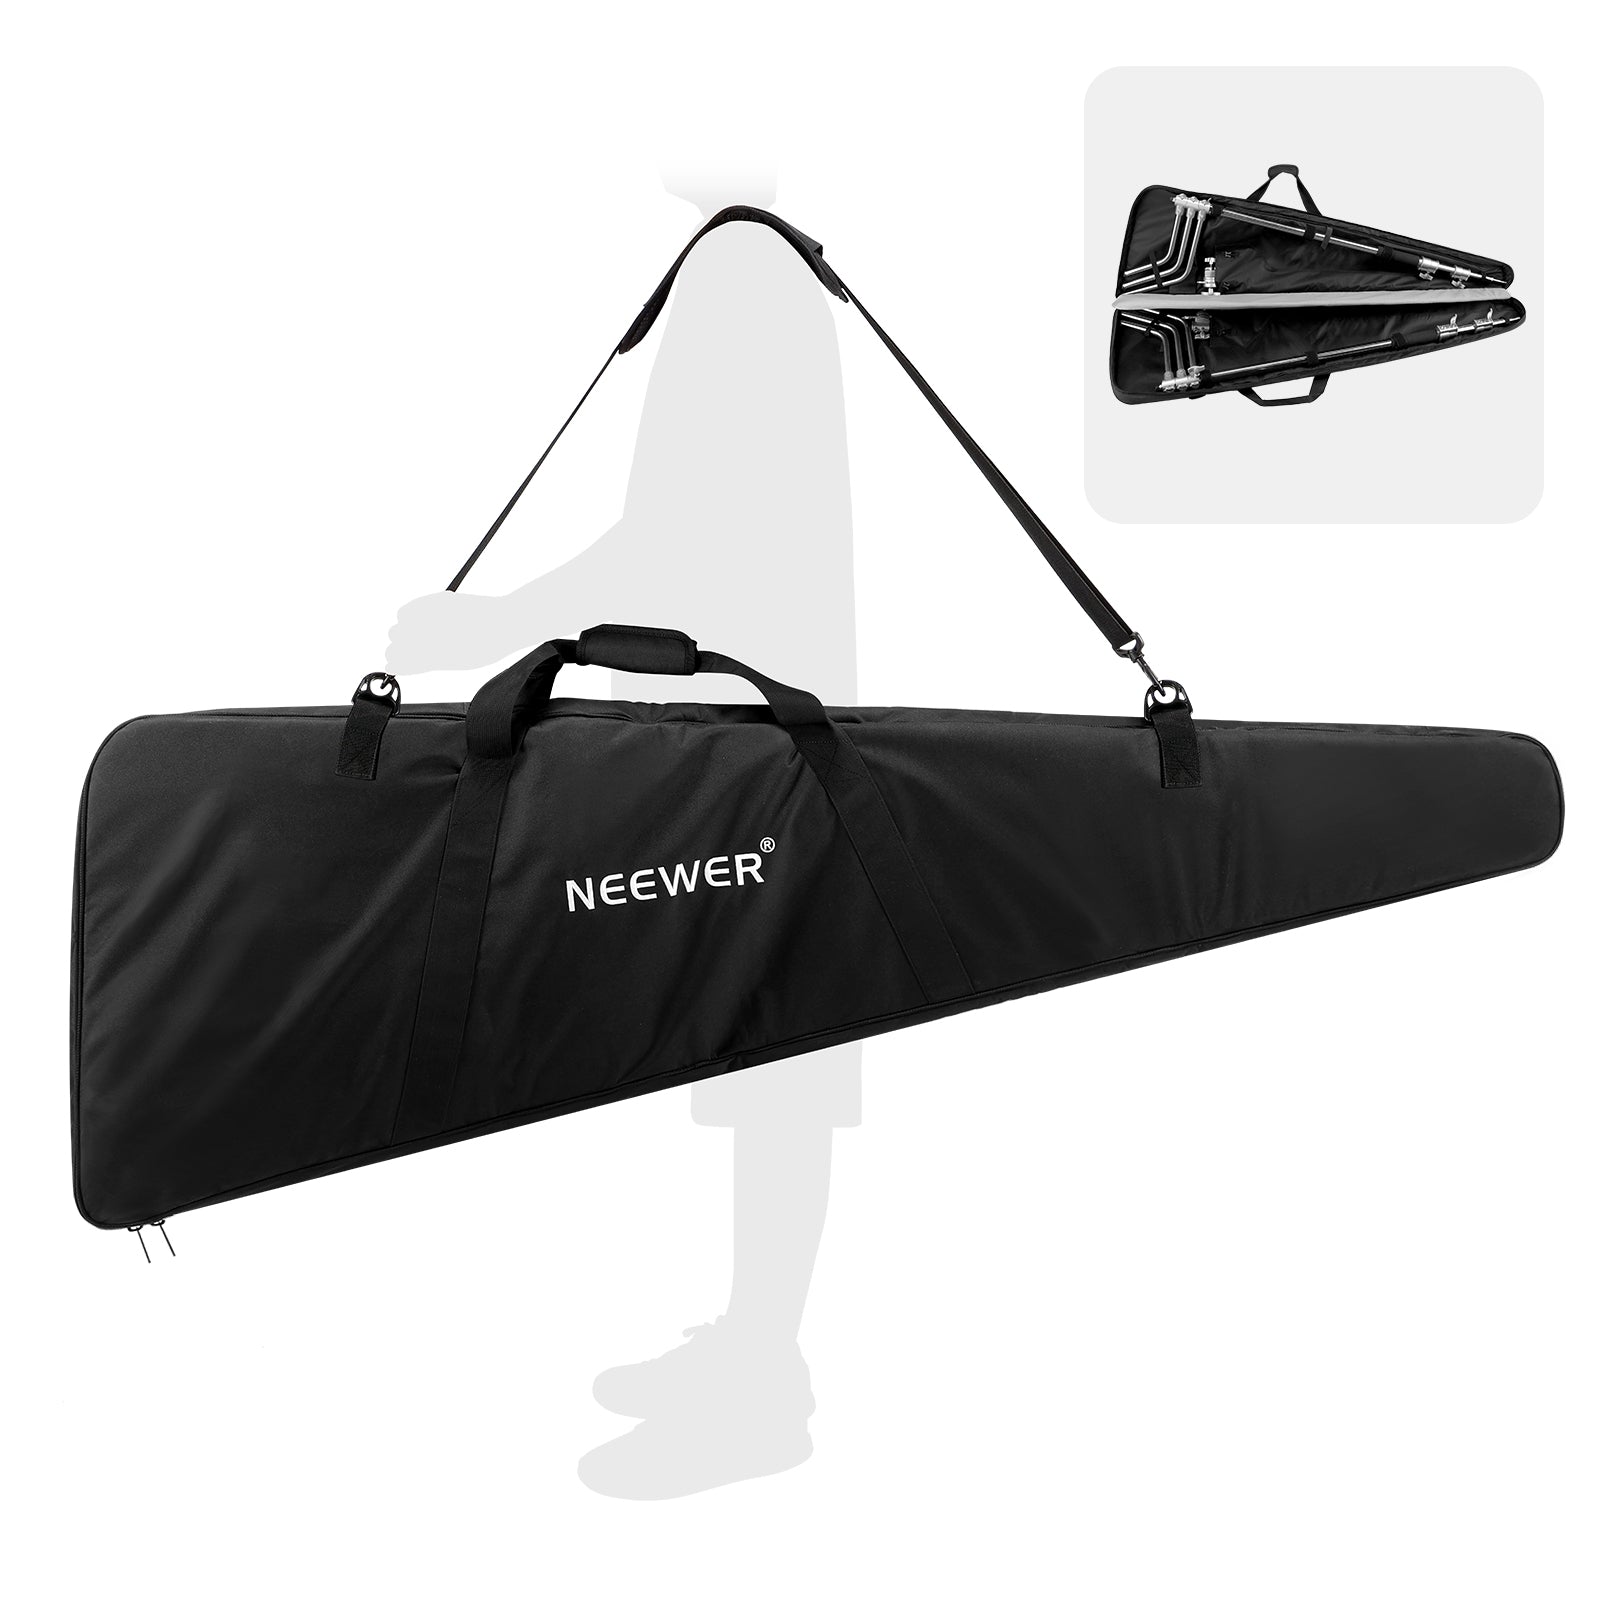 Neewer Large Photo Studio Lighting Equipment Carrying Bag for Light Stand  Tripod | eBay